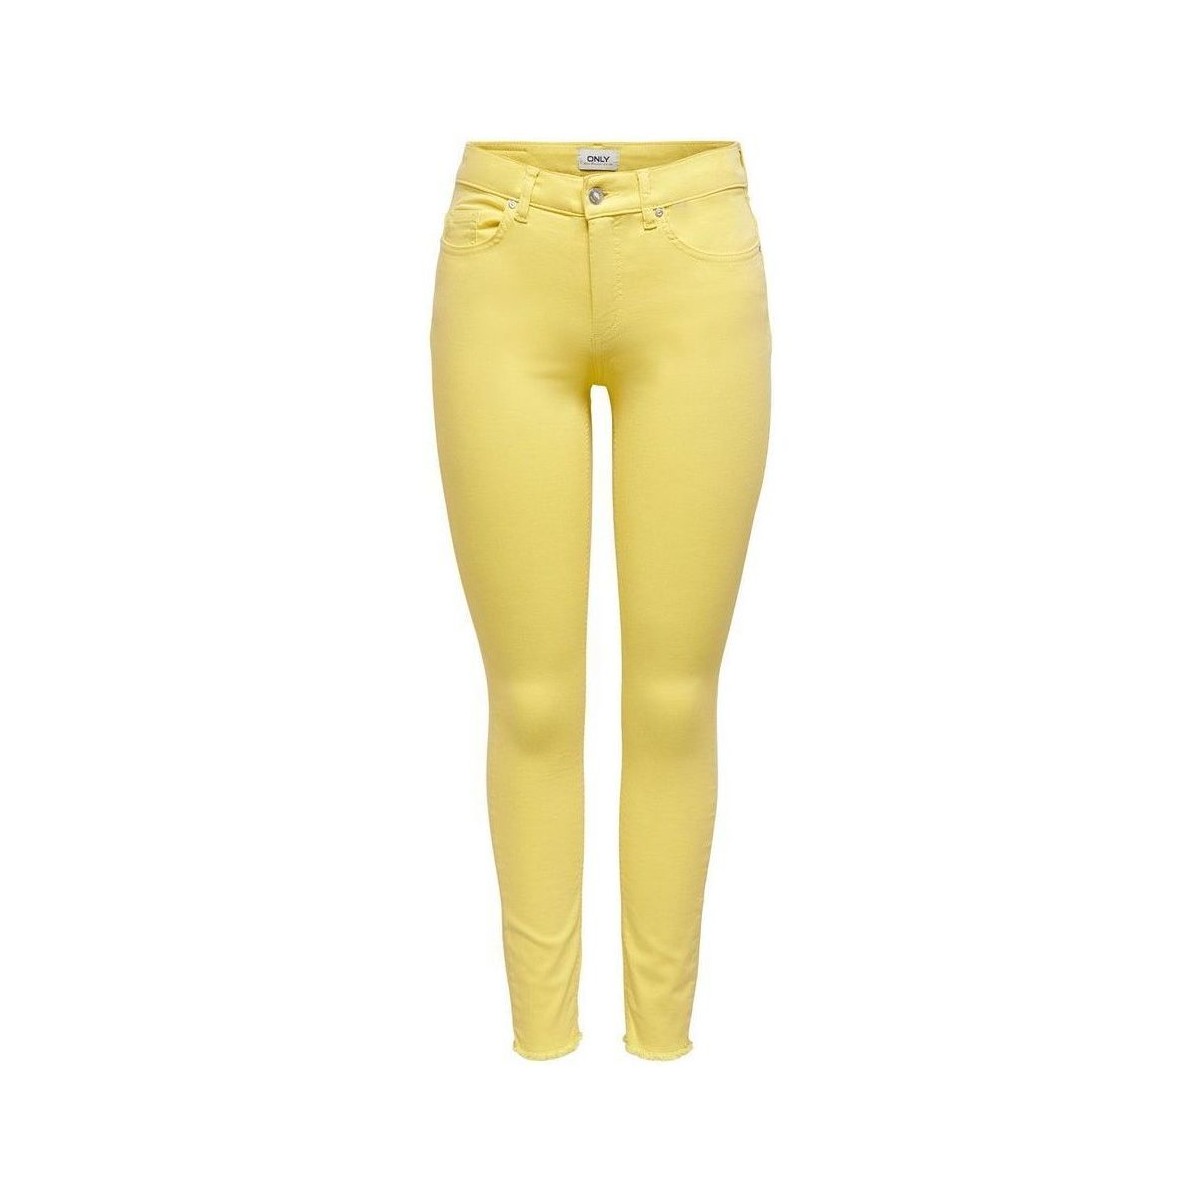 Vêtements Femme Pantalons Only 15183652 BLUSH-STRAW Jaune